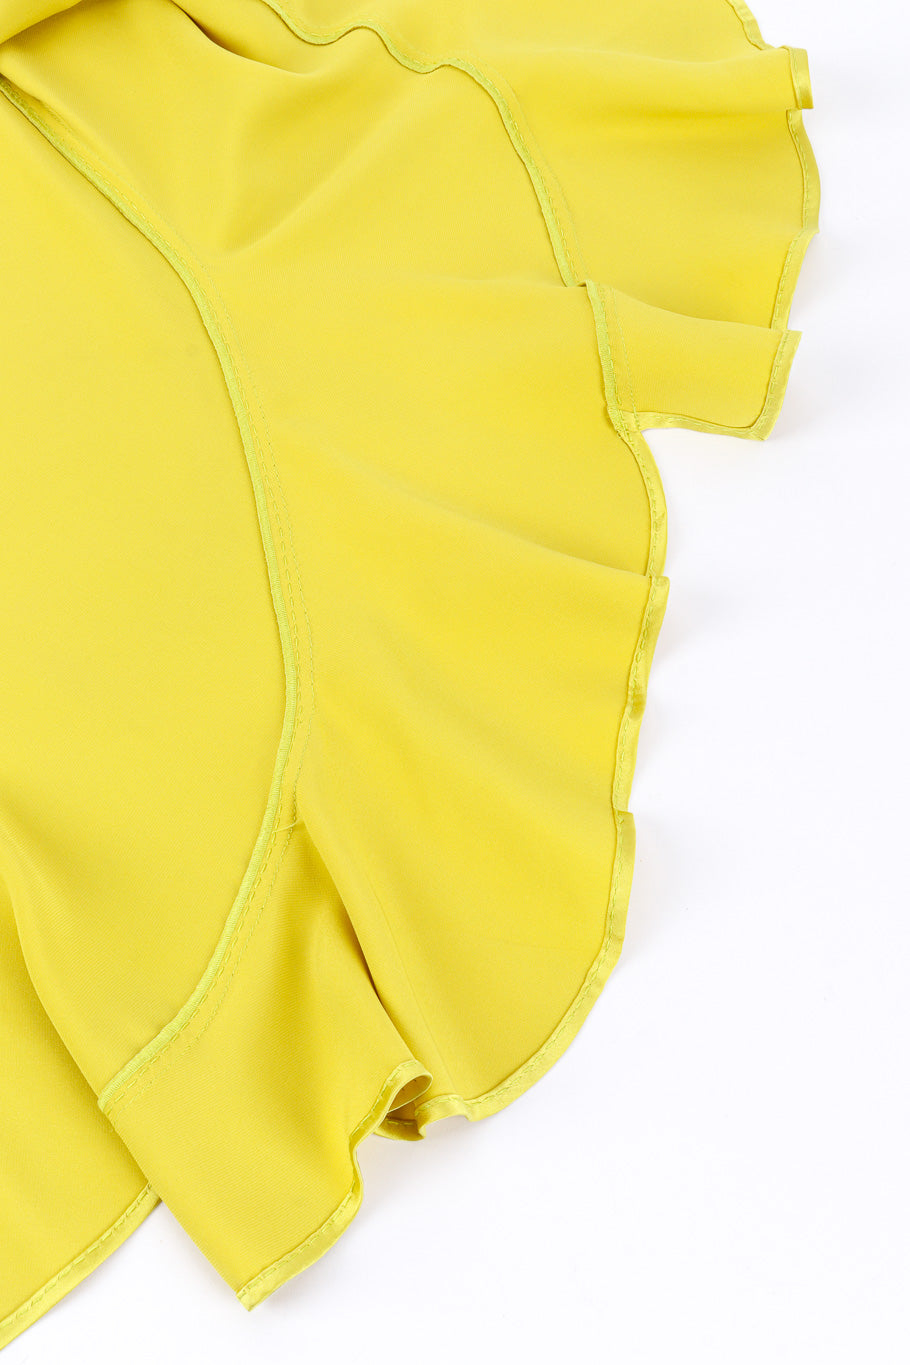 Ruffle hem skirt by Yves Saint Laurent lining and seams @recessla